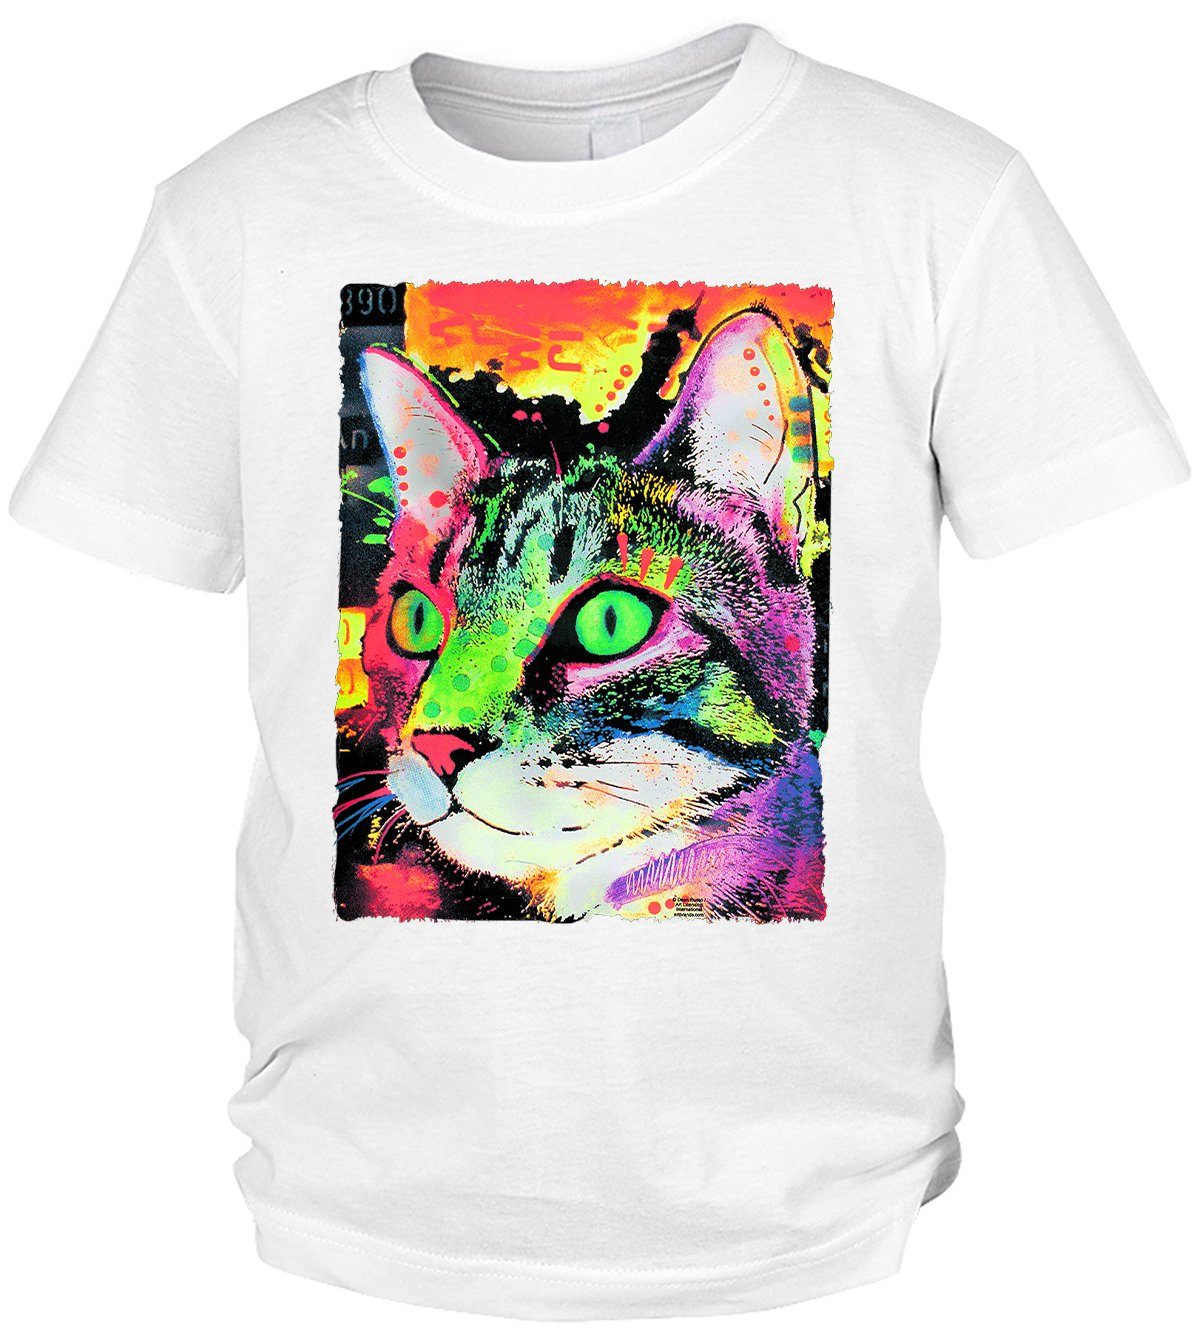 Shirt - Motiv Kindershirt Katzen Kinder Tini Shirts buntes : Curiosity Cat Katzenmotiv Print-Shirt für